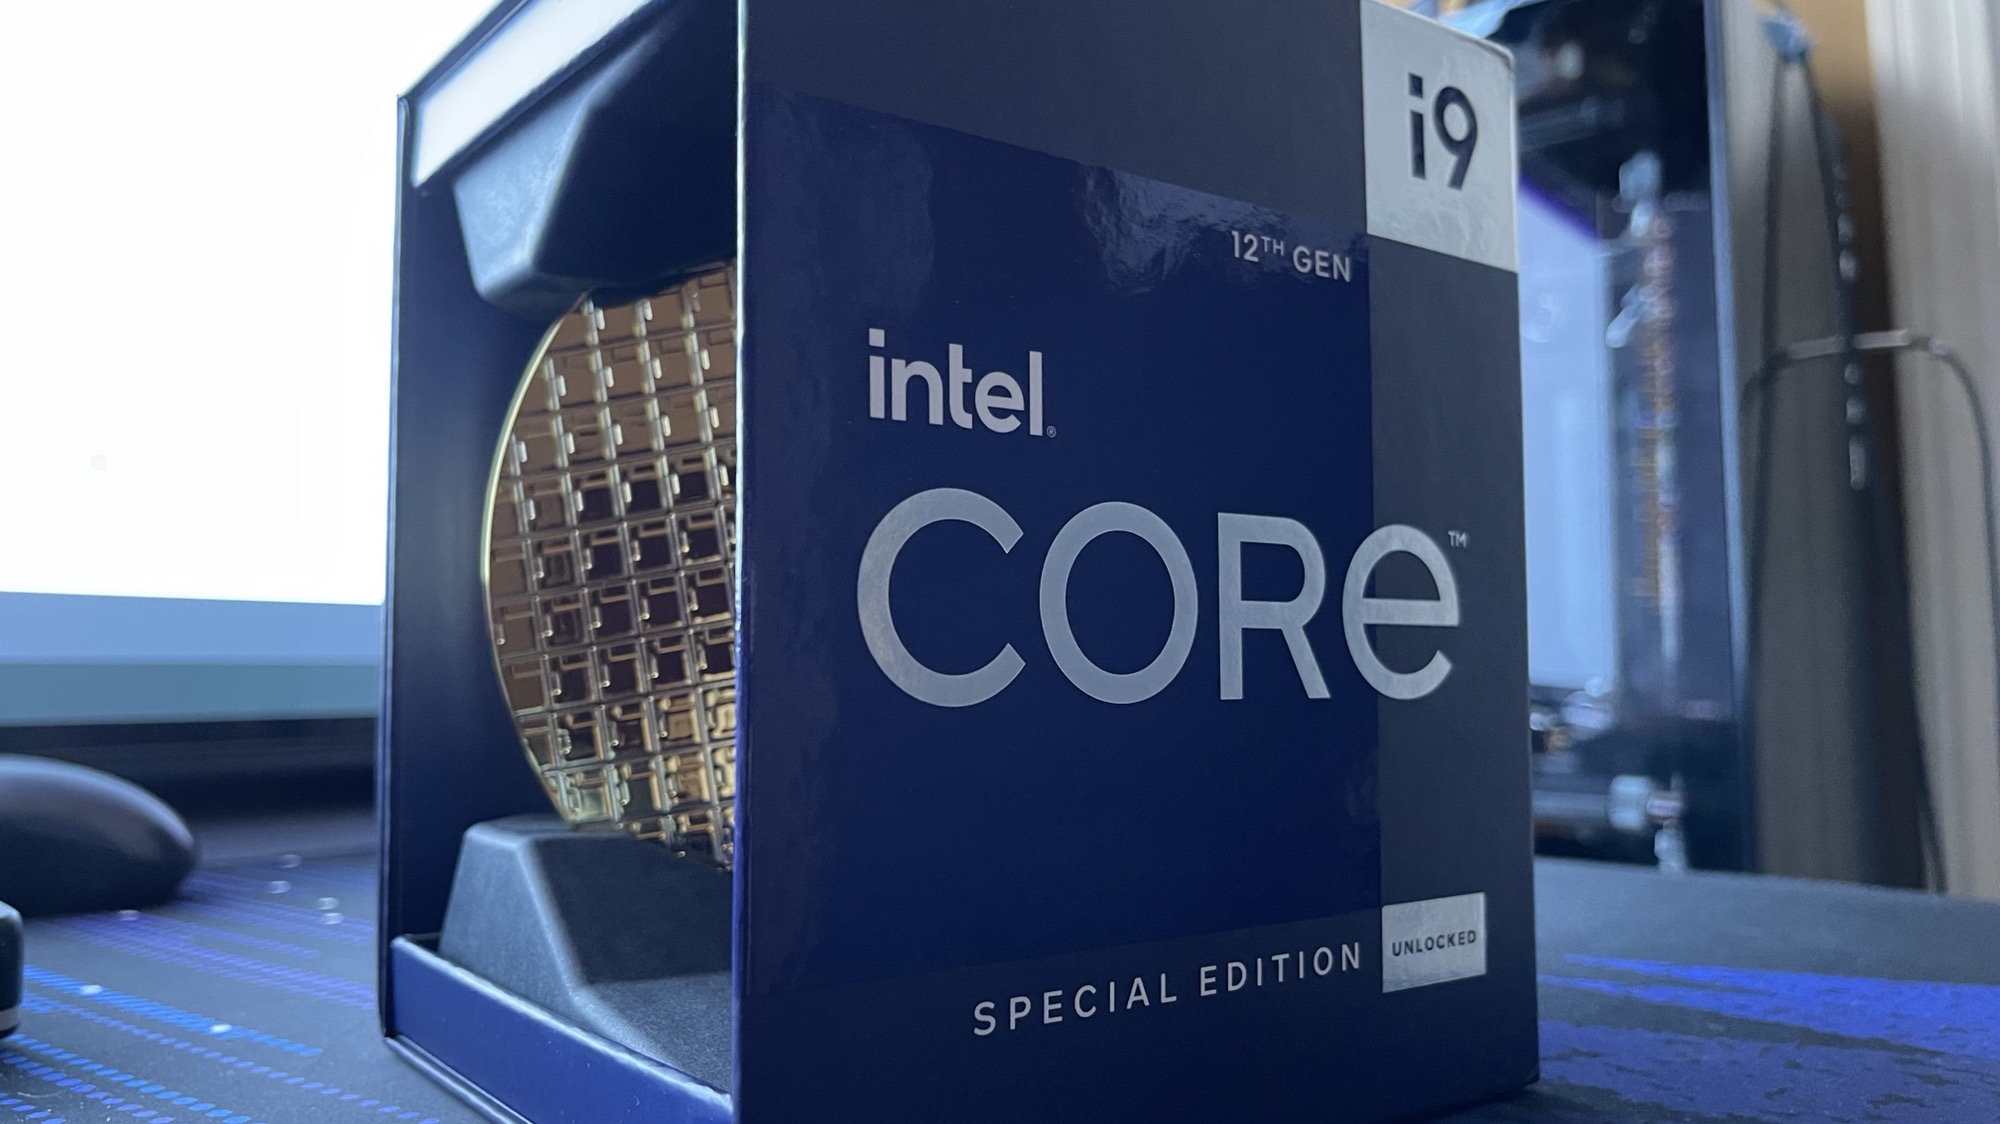 12th Gen Intel Core i9-12900KS Launches as World's Fastest Desktop